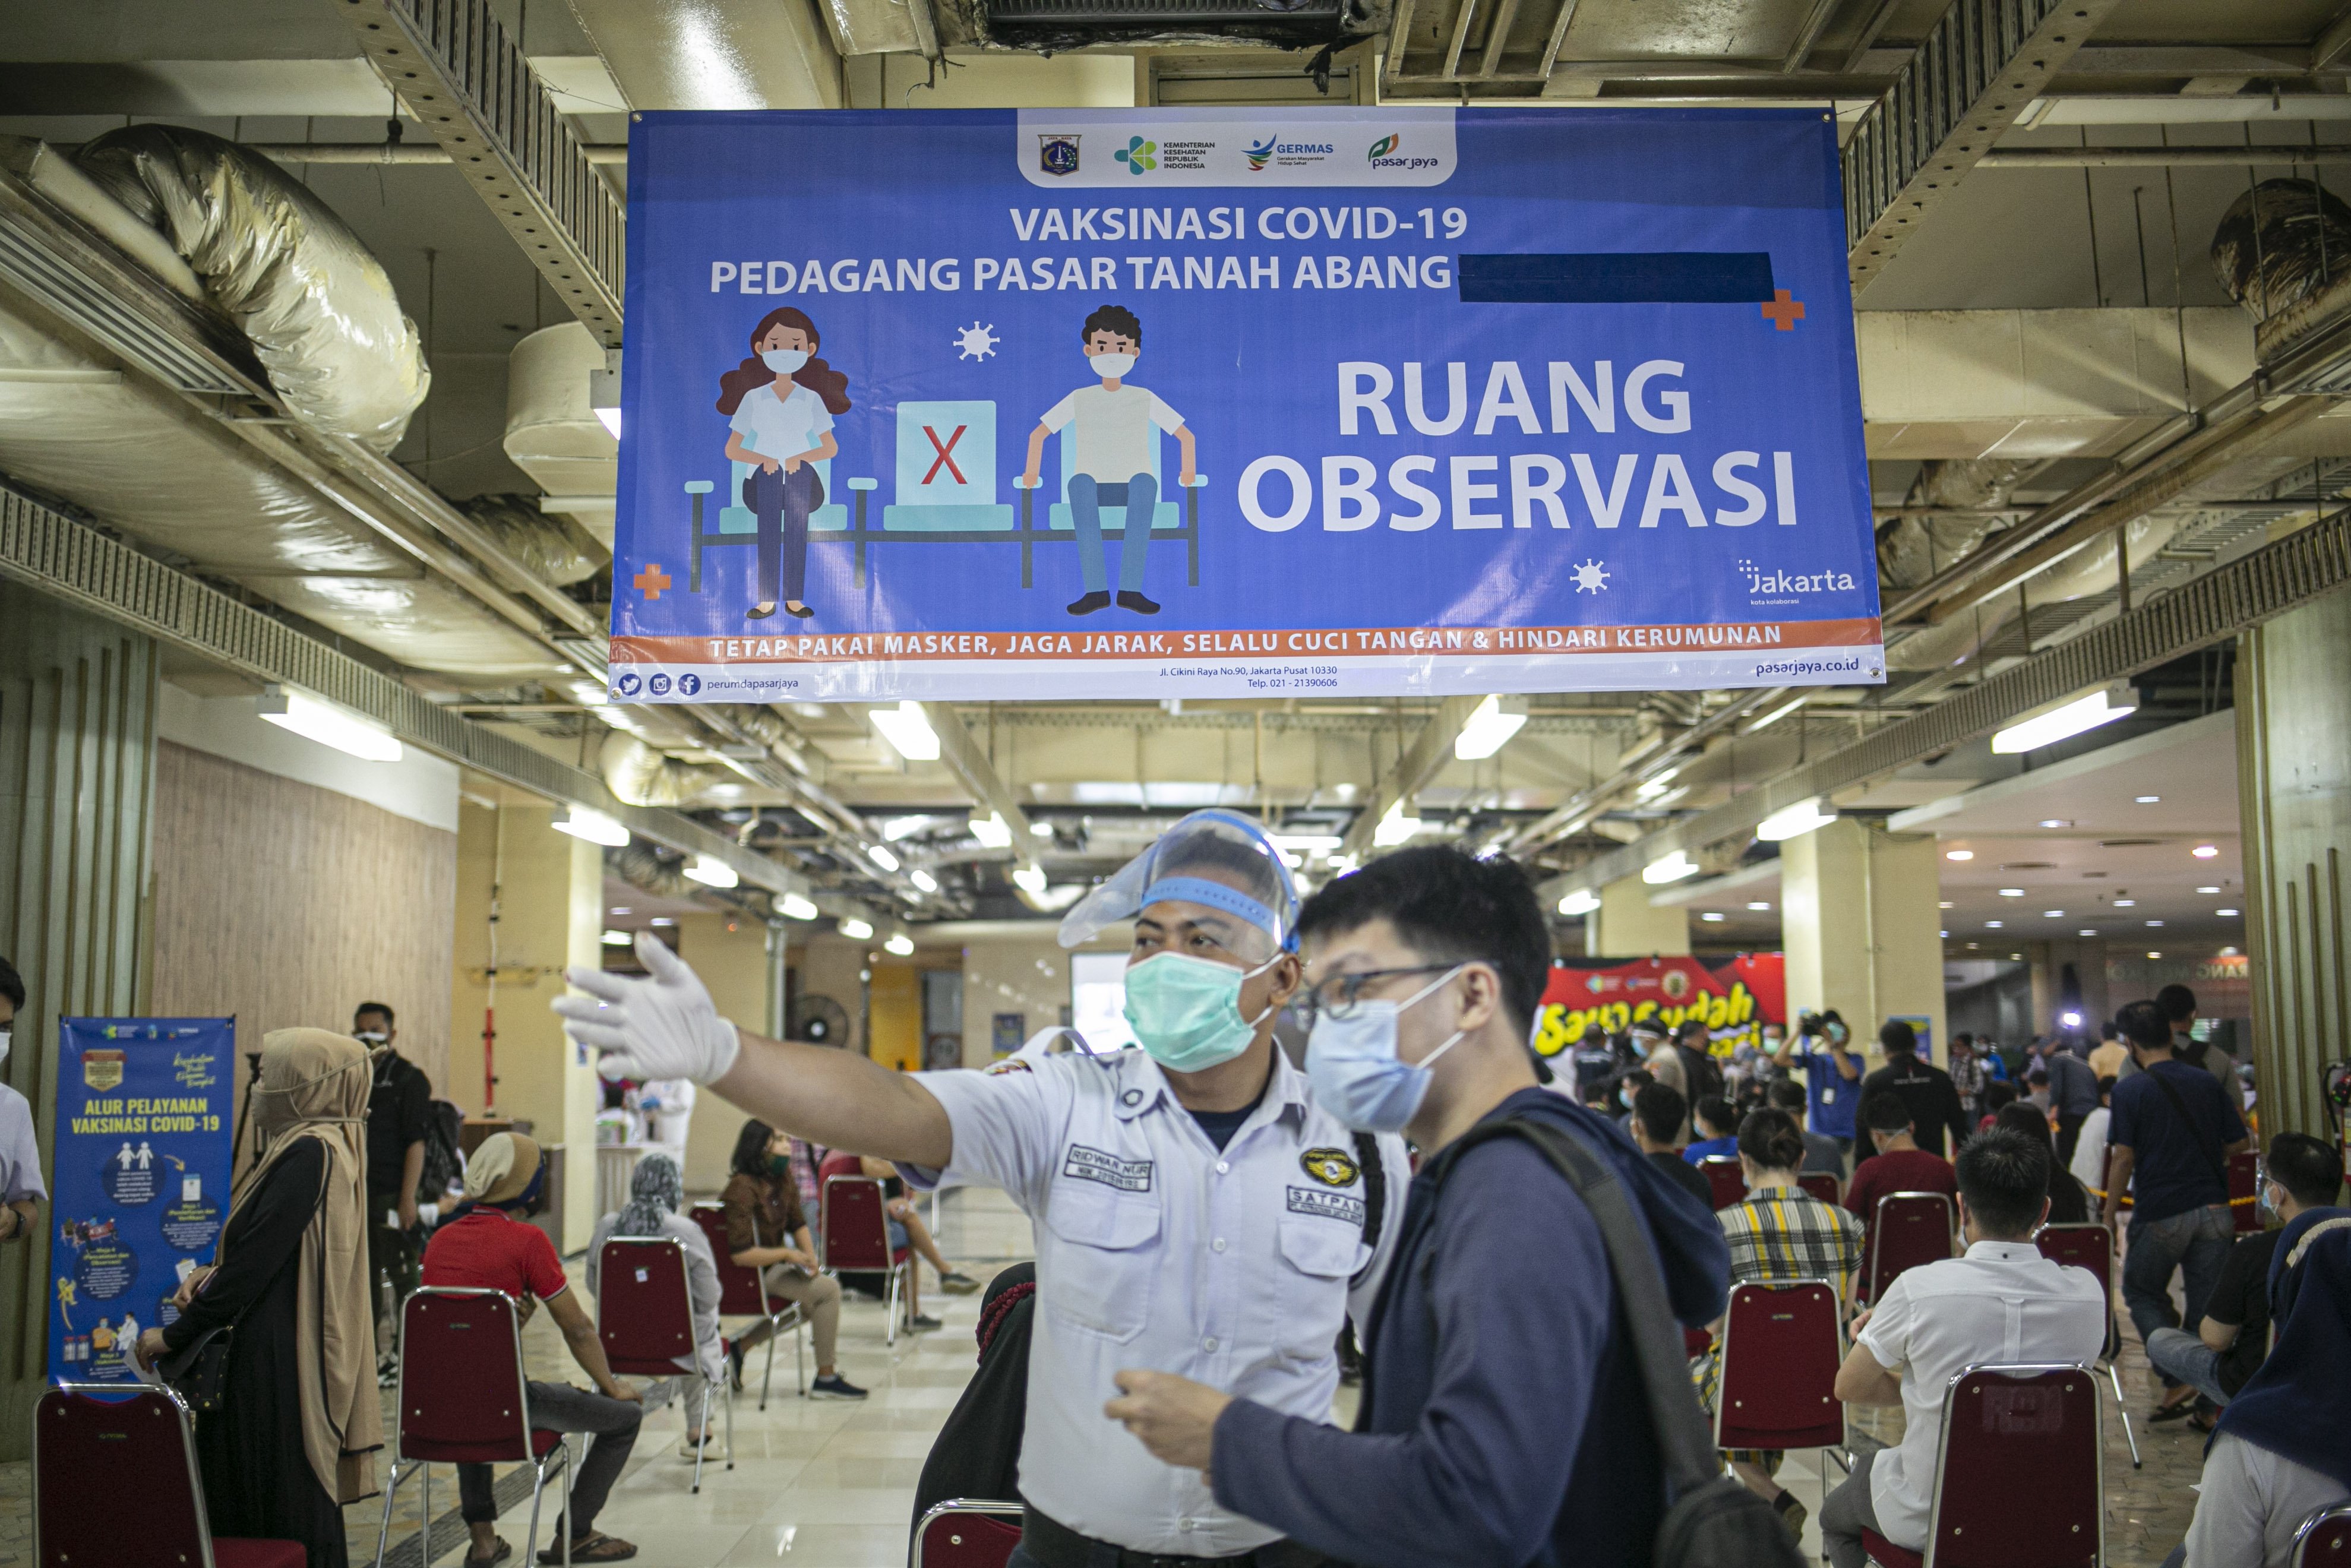 Petugas keamanan mengarahkan pedagang saat proses vaksinasi di Pasar Tanah Abang Blok A, Jakarta, Rabu (17/2/2021). Vaksinasi covid-19 tahap kedua yang diberikan untuk pekerja publik dan lansia itu dimulai dari pedagang Pasar Tanah Abang.